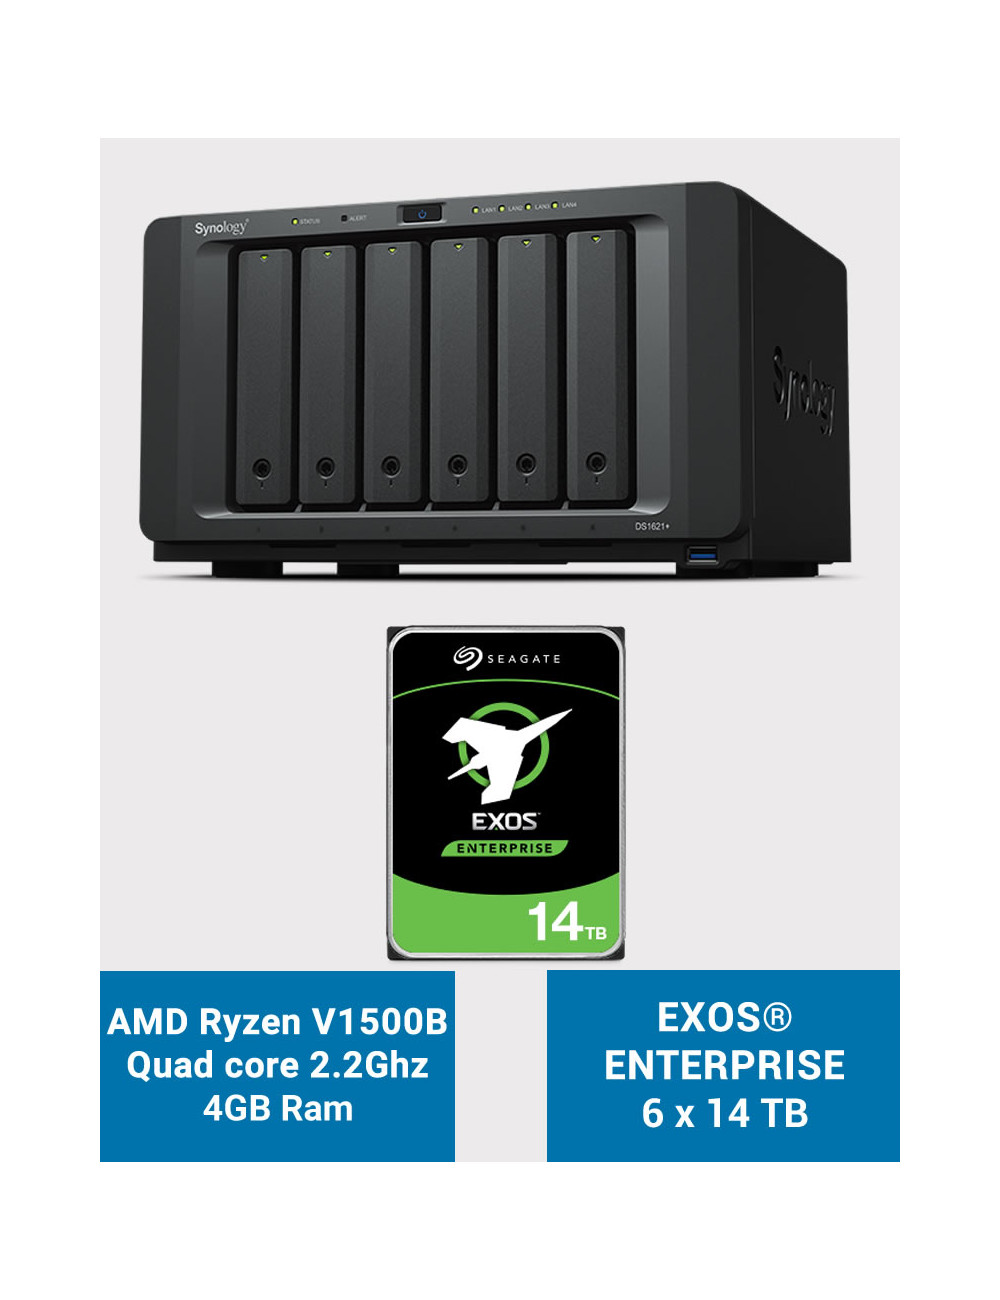 Synology DS1621+ NAS Server EXOS Enterprise 84TB (6x14TB)